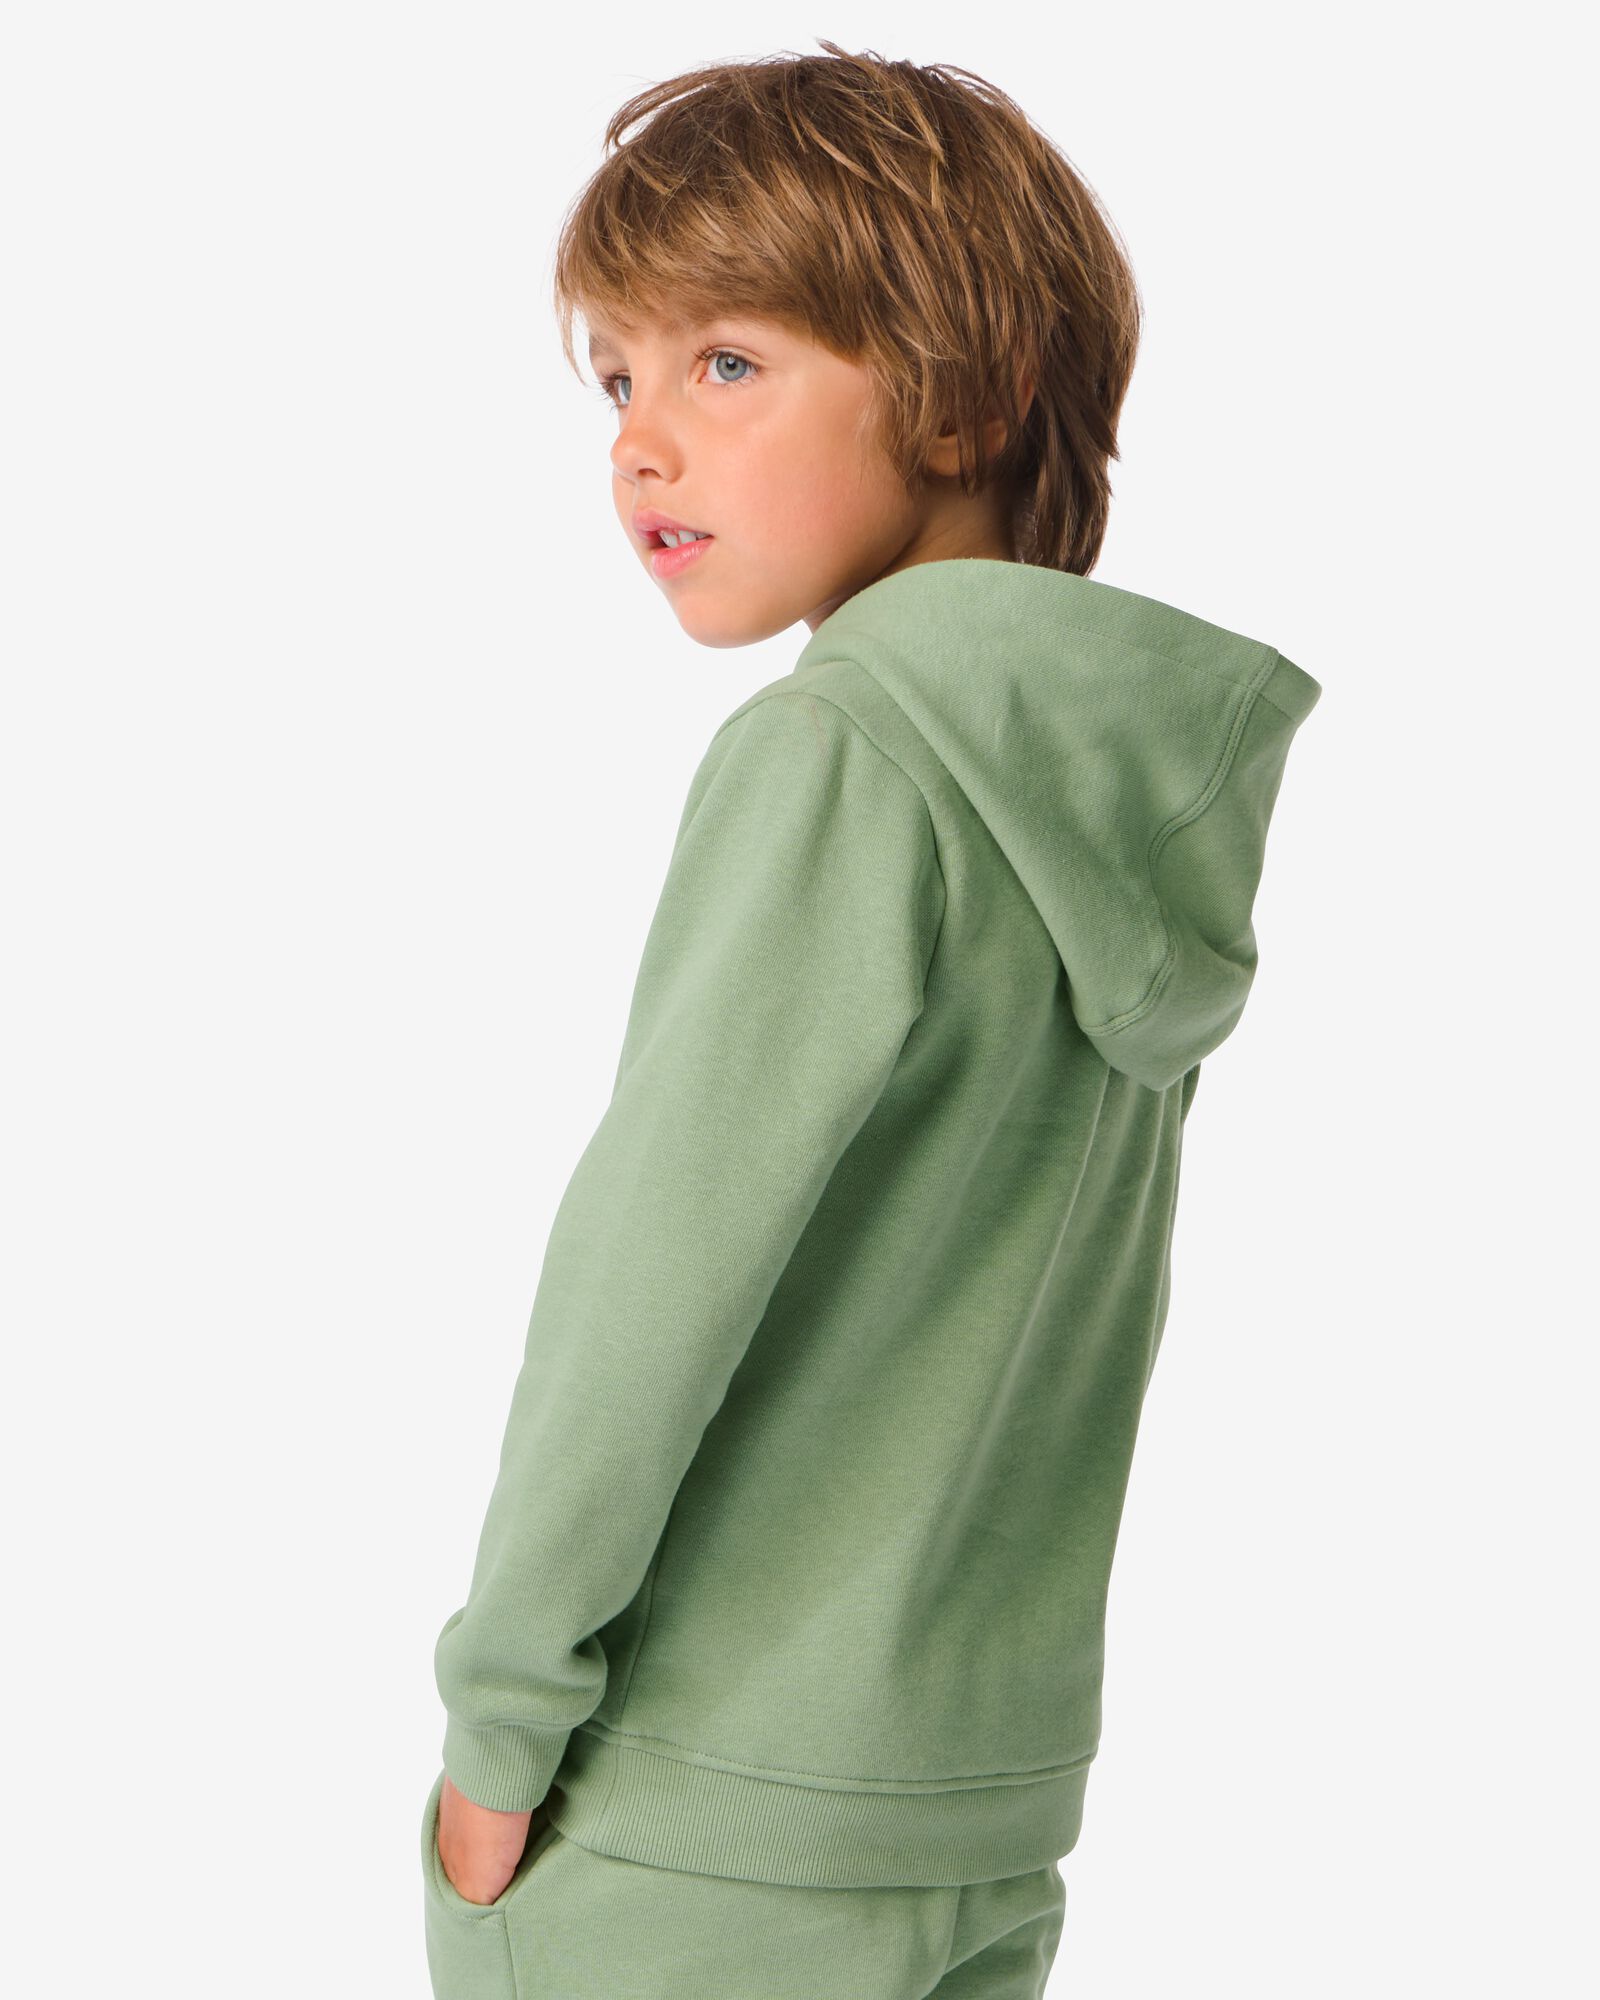 kinder hoodie met kangeroezak groen 134/140 - 30769431 - HEMA